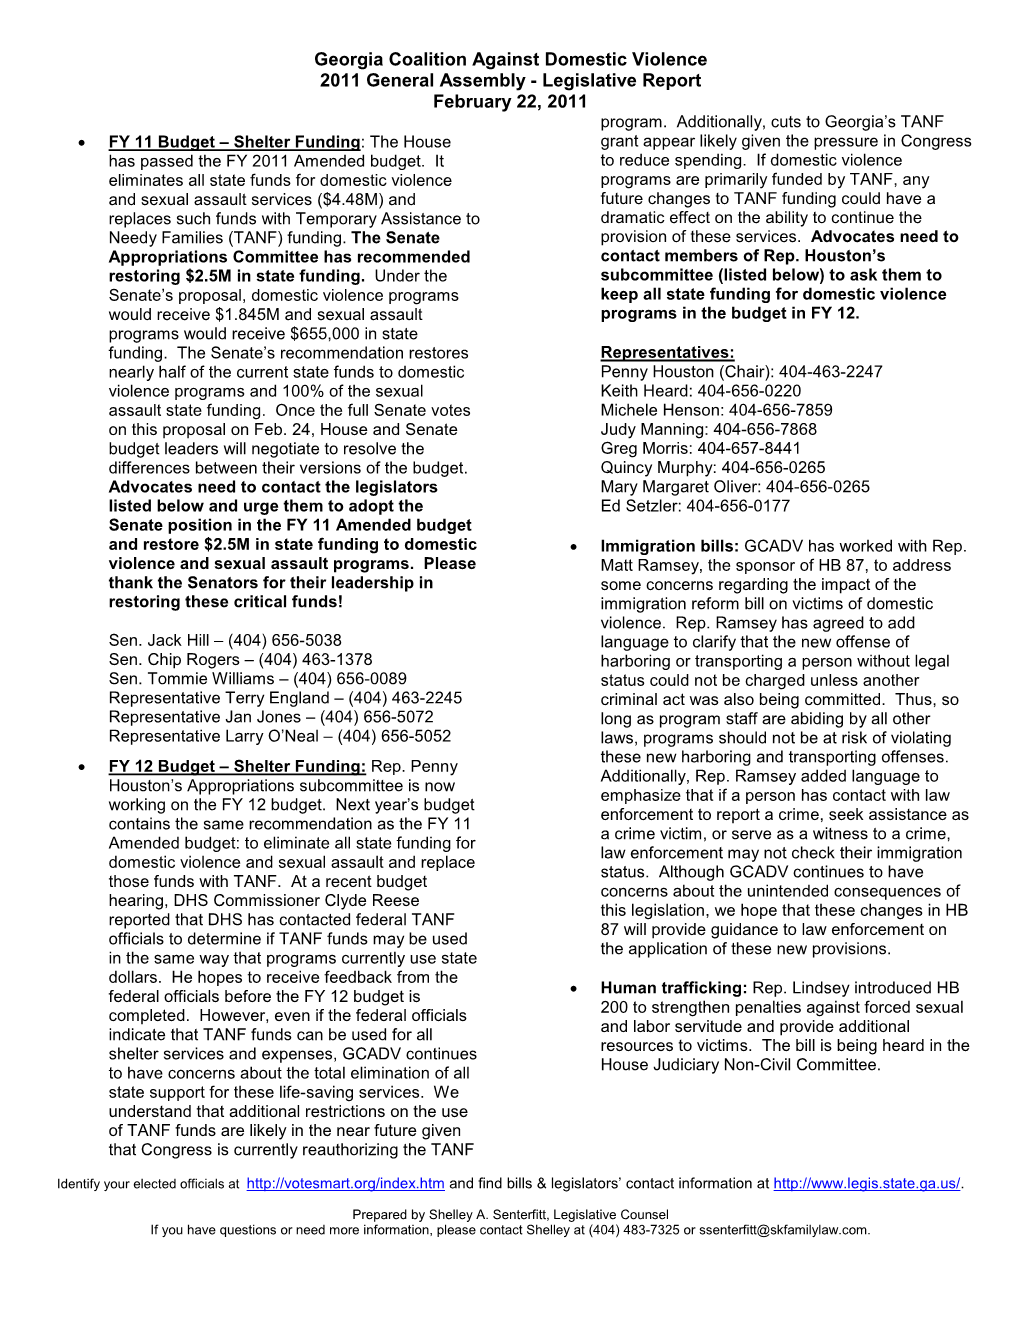 Legislative Report February 22, 2011 Program